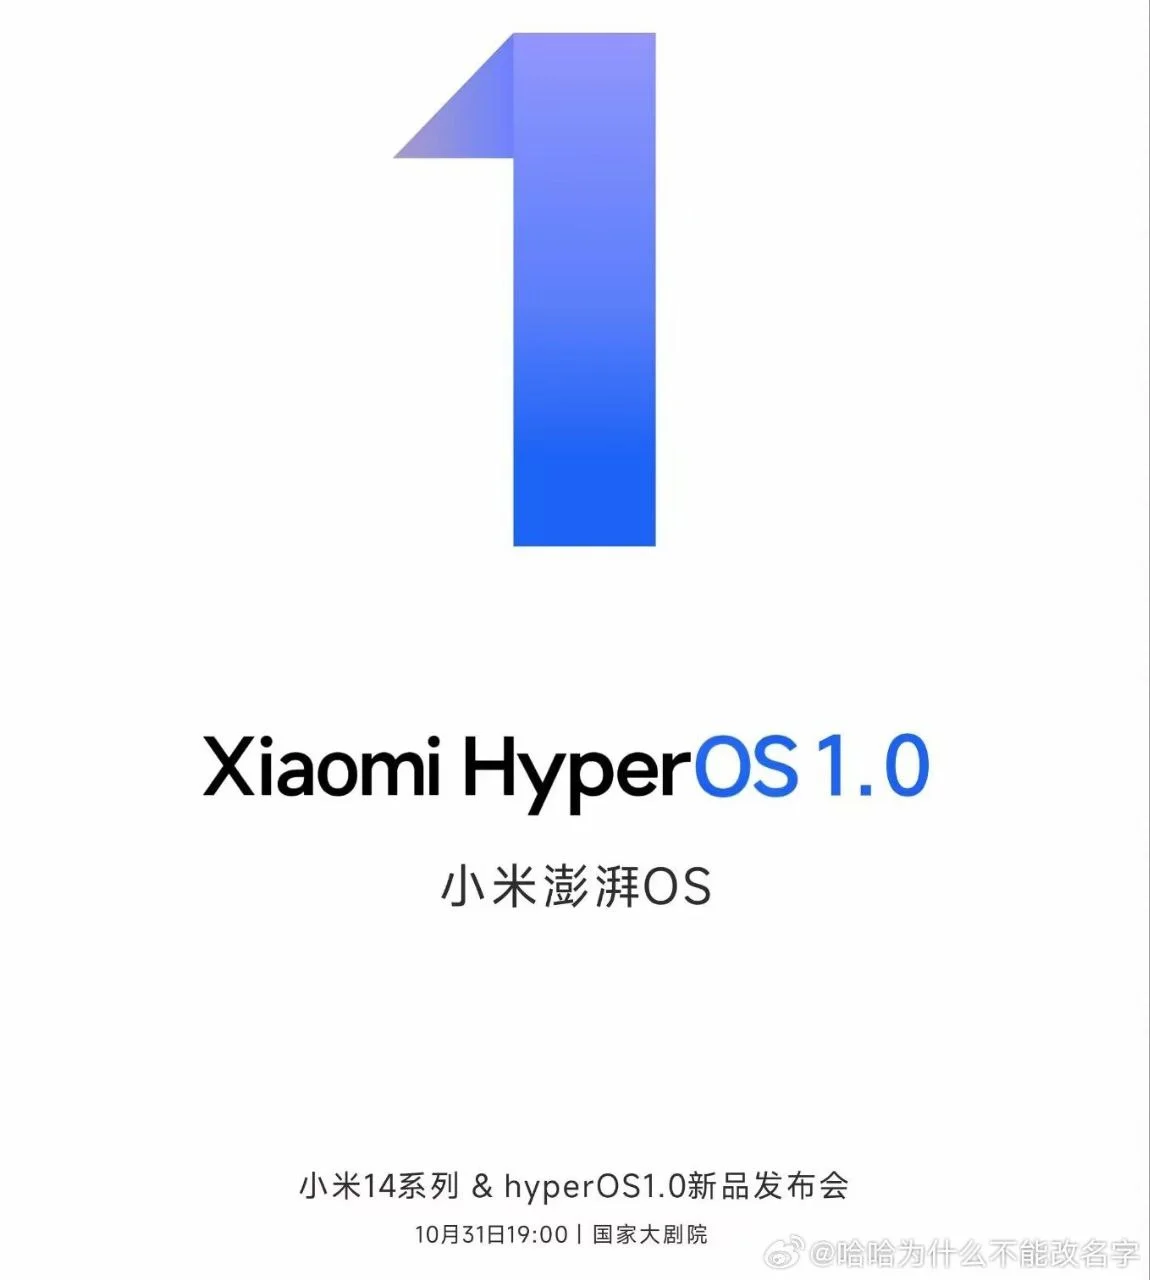 Xiaomi HyperOS Release Date